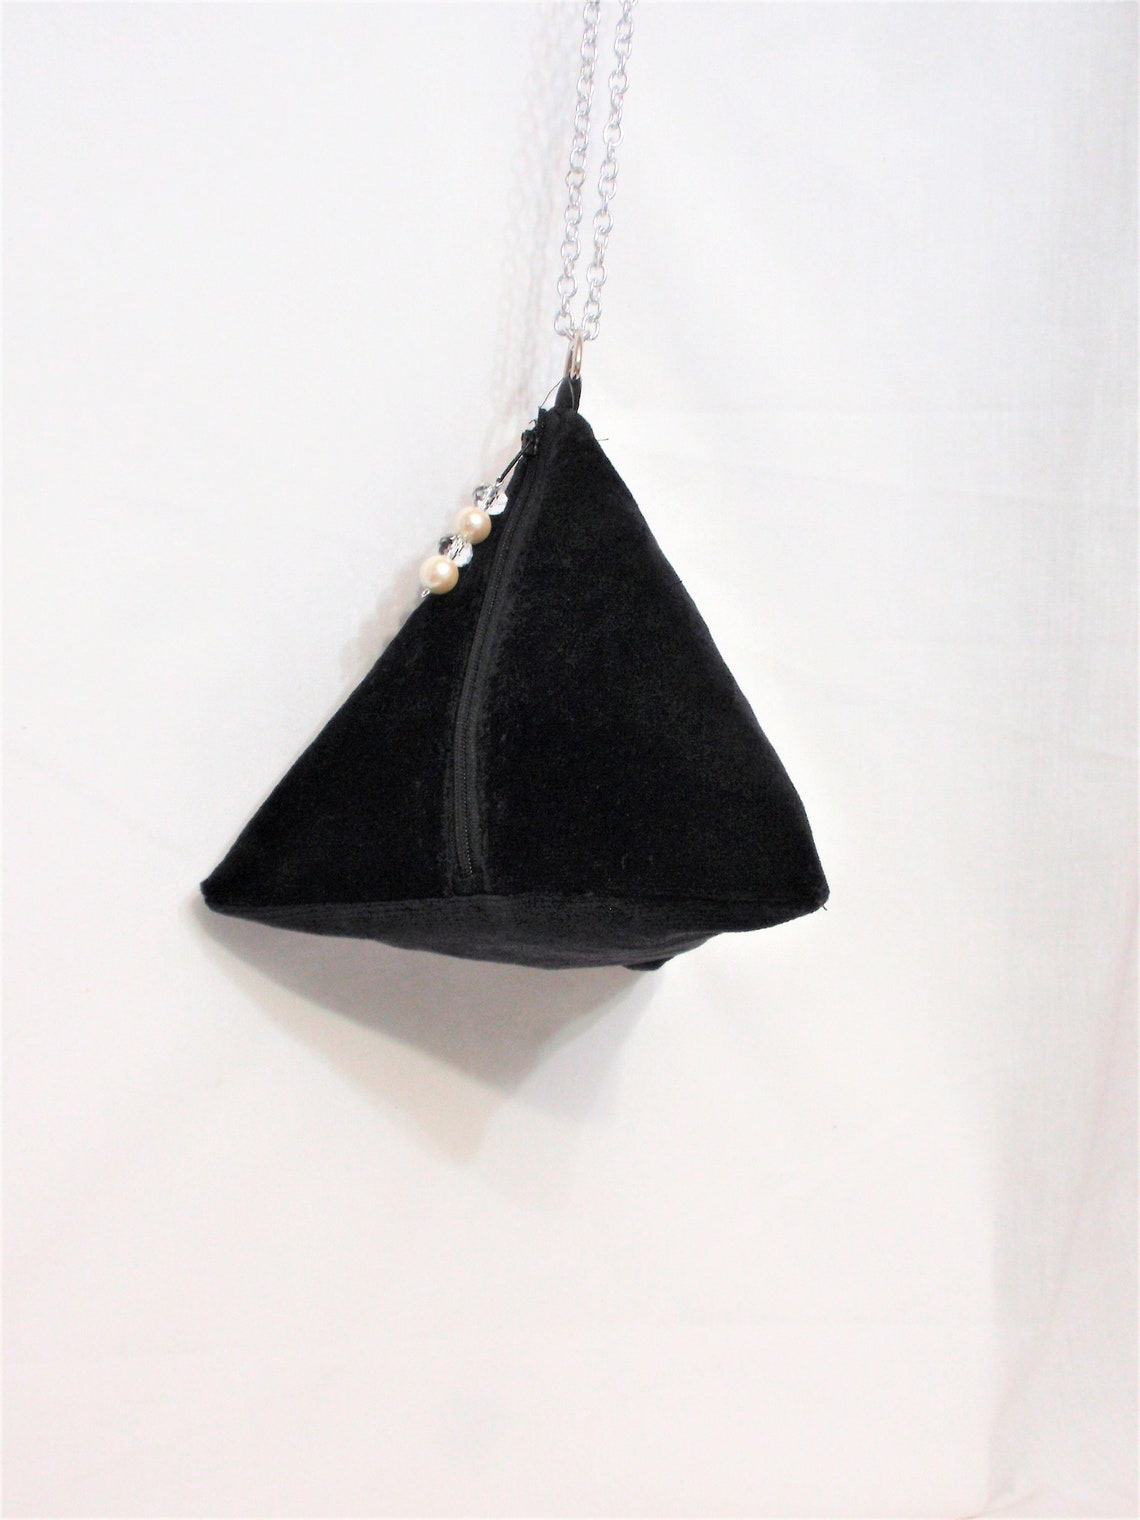 Pyramid/Triangle zipper purse 7.5 X7.5 X7.5 | Etsy